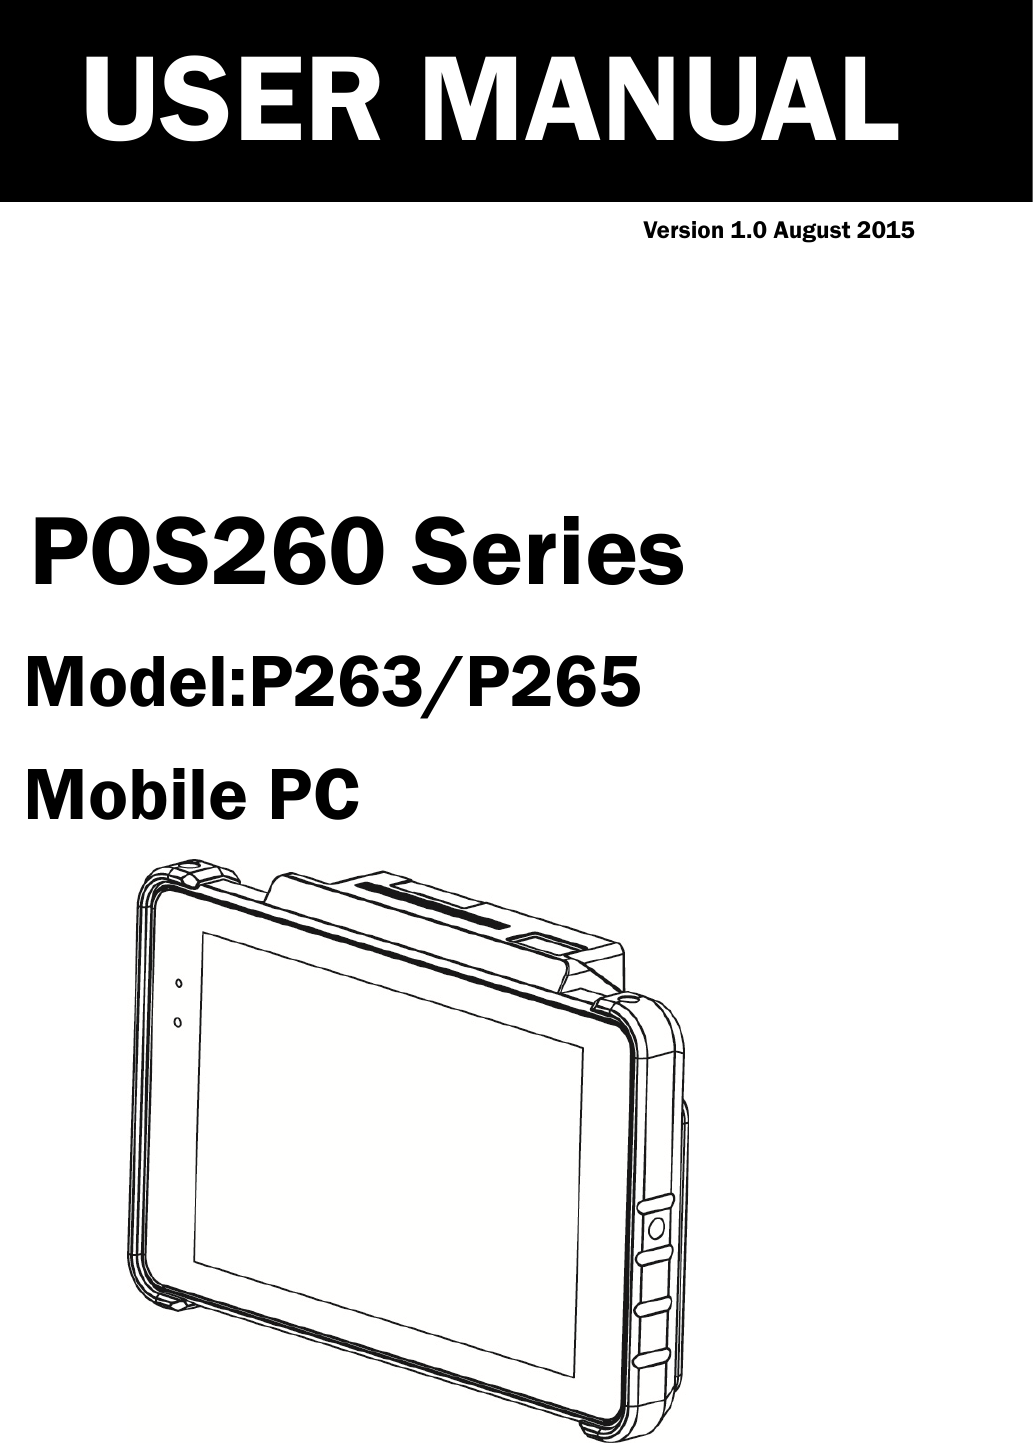            Version 1.0 August 2015       POS260 Series Model:P263/P265 Mobile PC          USER MANUAL 